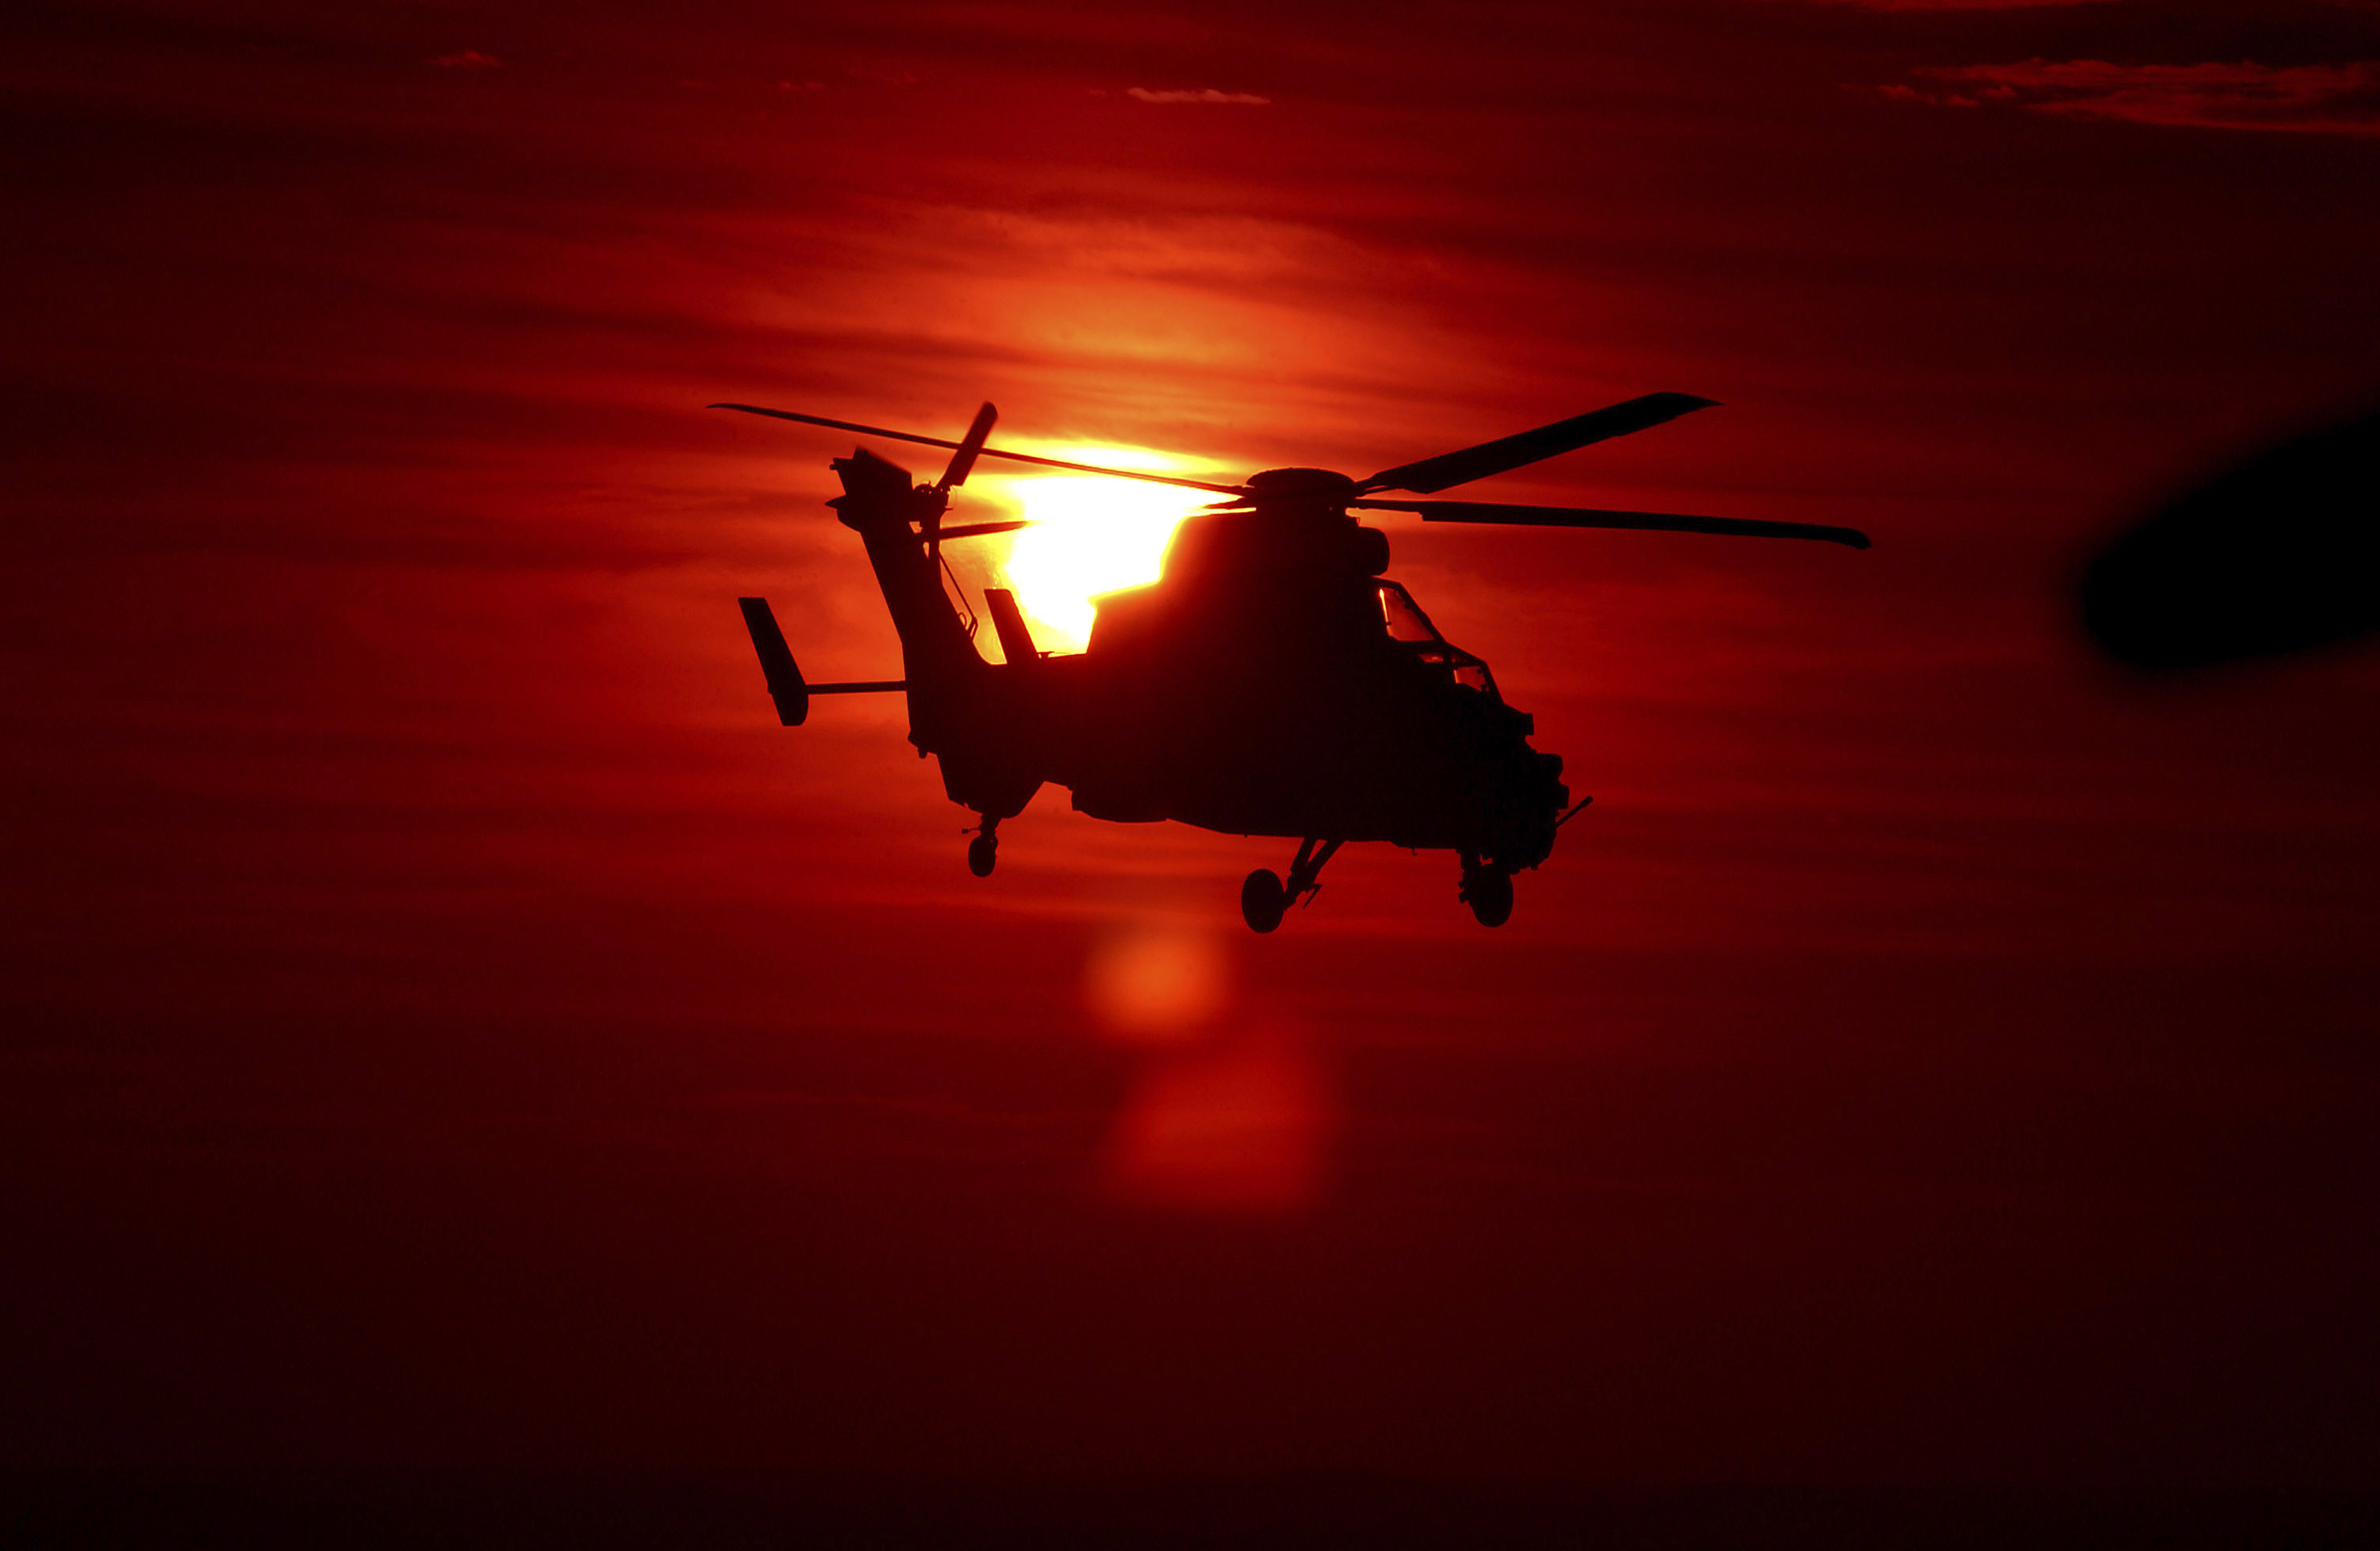 275303 descargar imagen helicóptero de ataque, helicópteros militares, militar, tigre eurocopter, helicóptero: fondos de pantalla y protectores de pantalla gratis